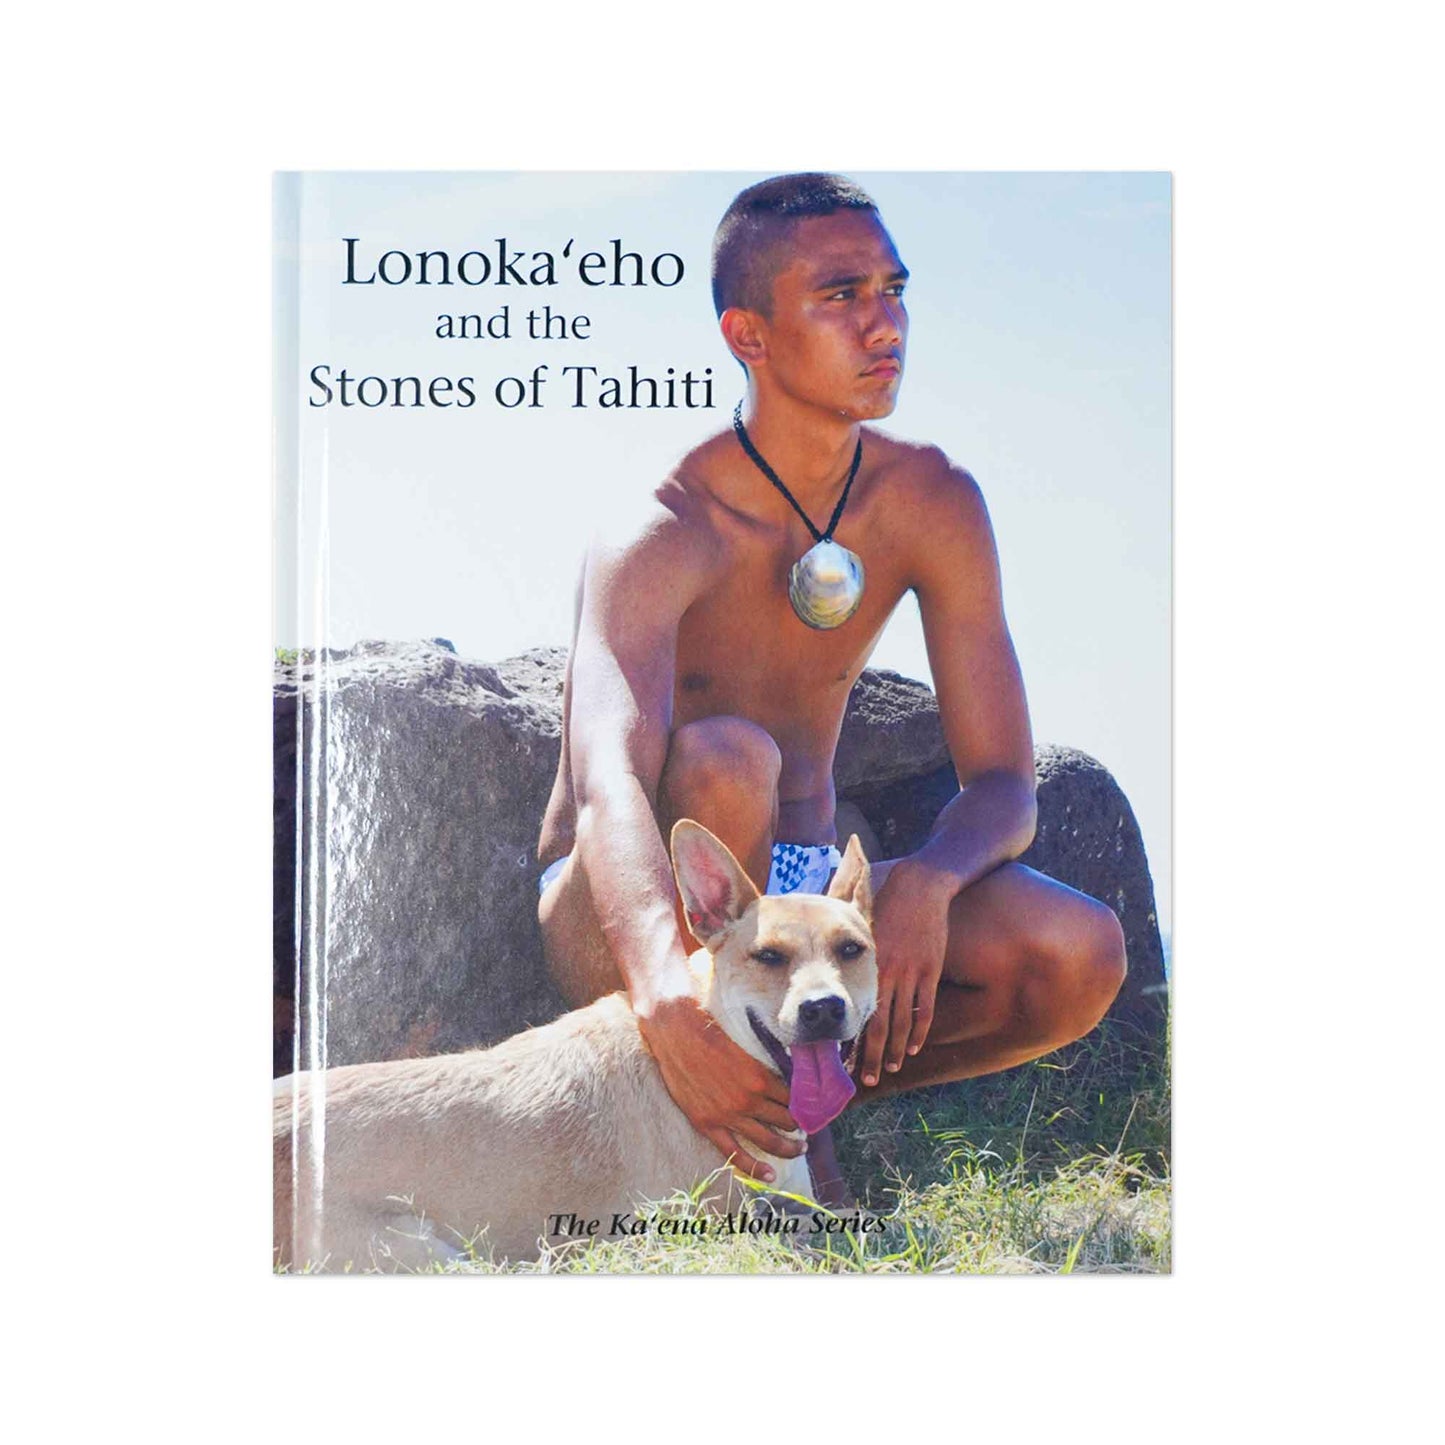 ʻŌlelo Hawaiʻi Hardcover Picture Book - Lonokaʻeho and the Stones of Tahiti